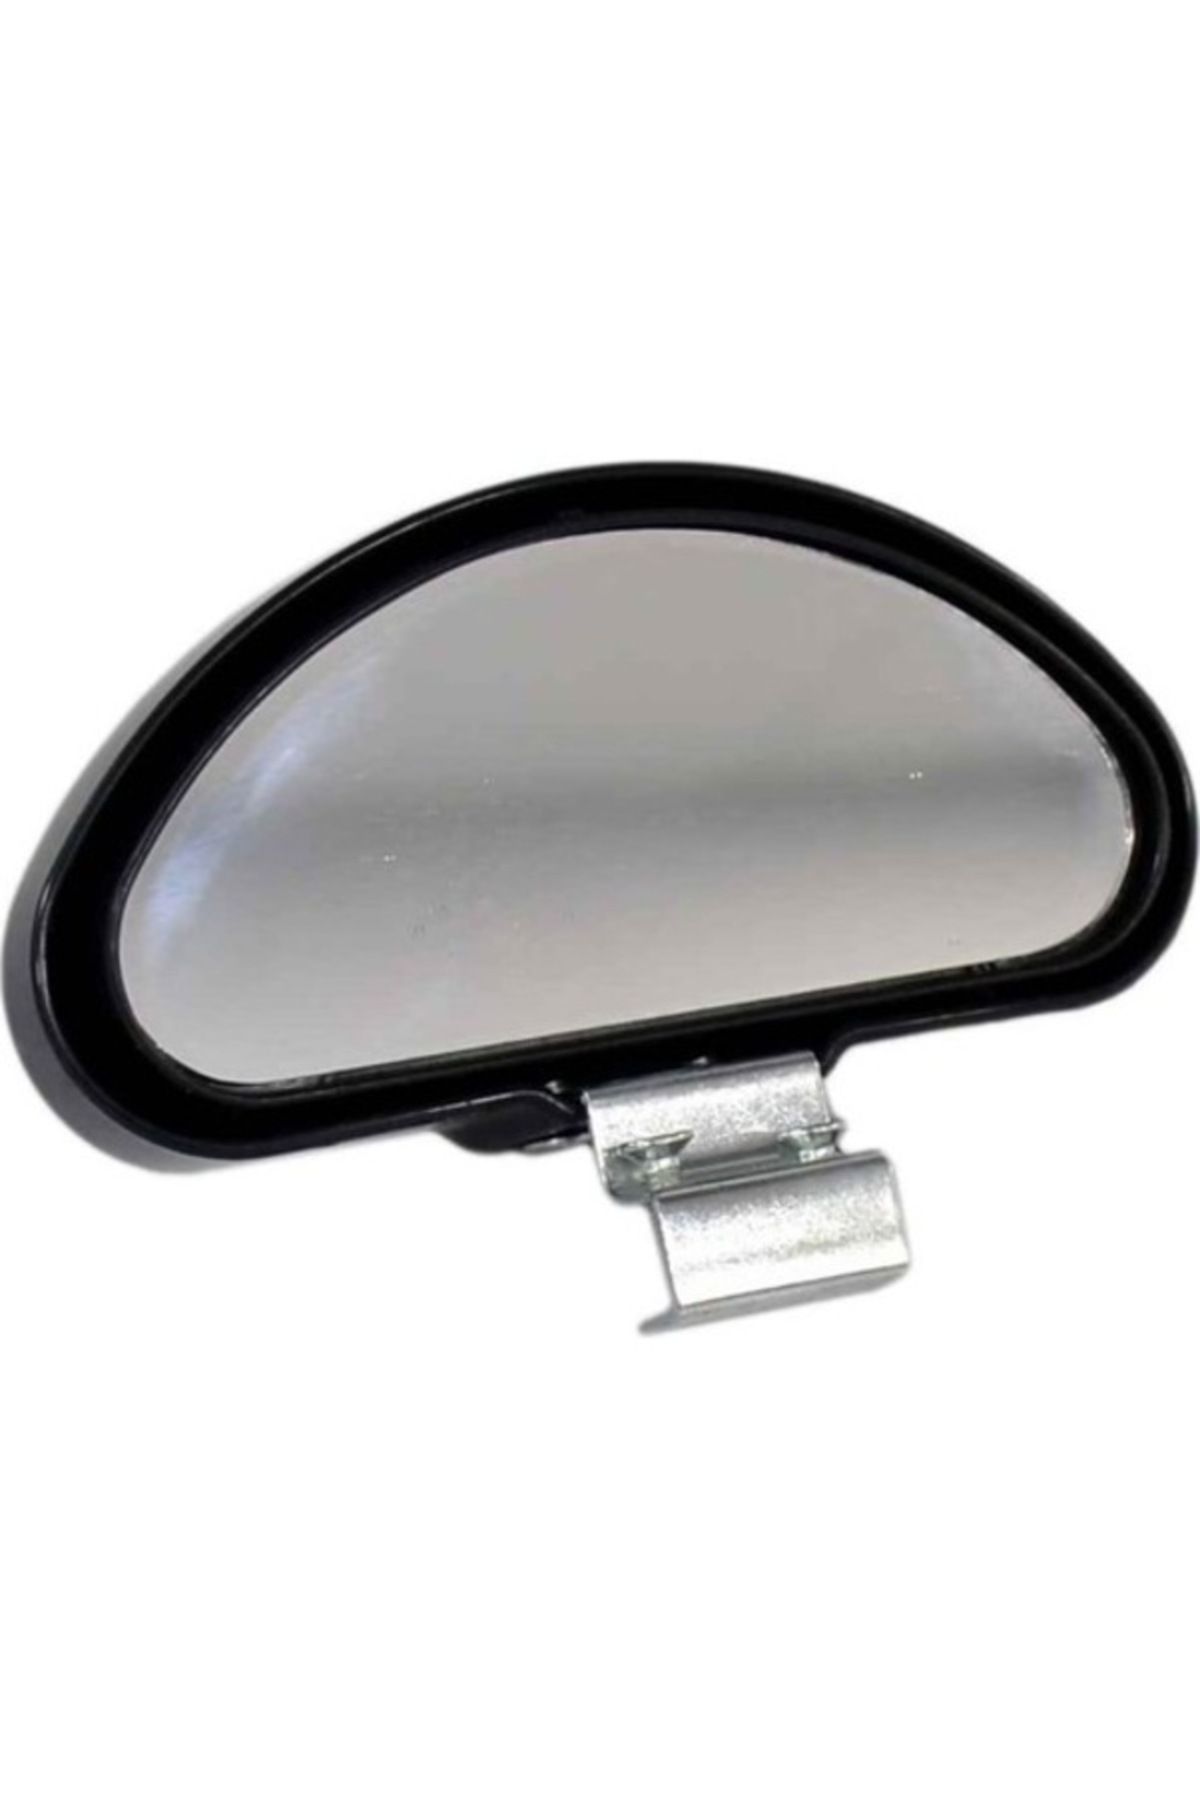 Carub Ayna Üstü Ilave Kör Nokta Aynası Eğitmen Aynası 11,5cmX7,5cm